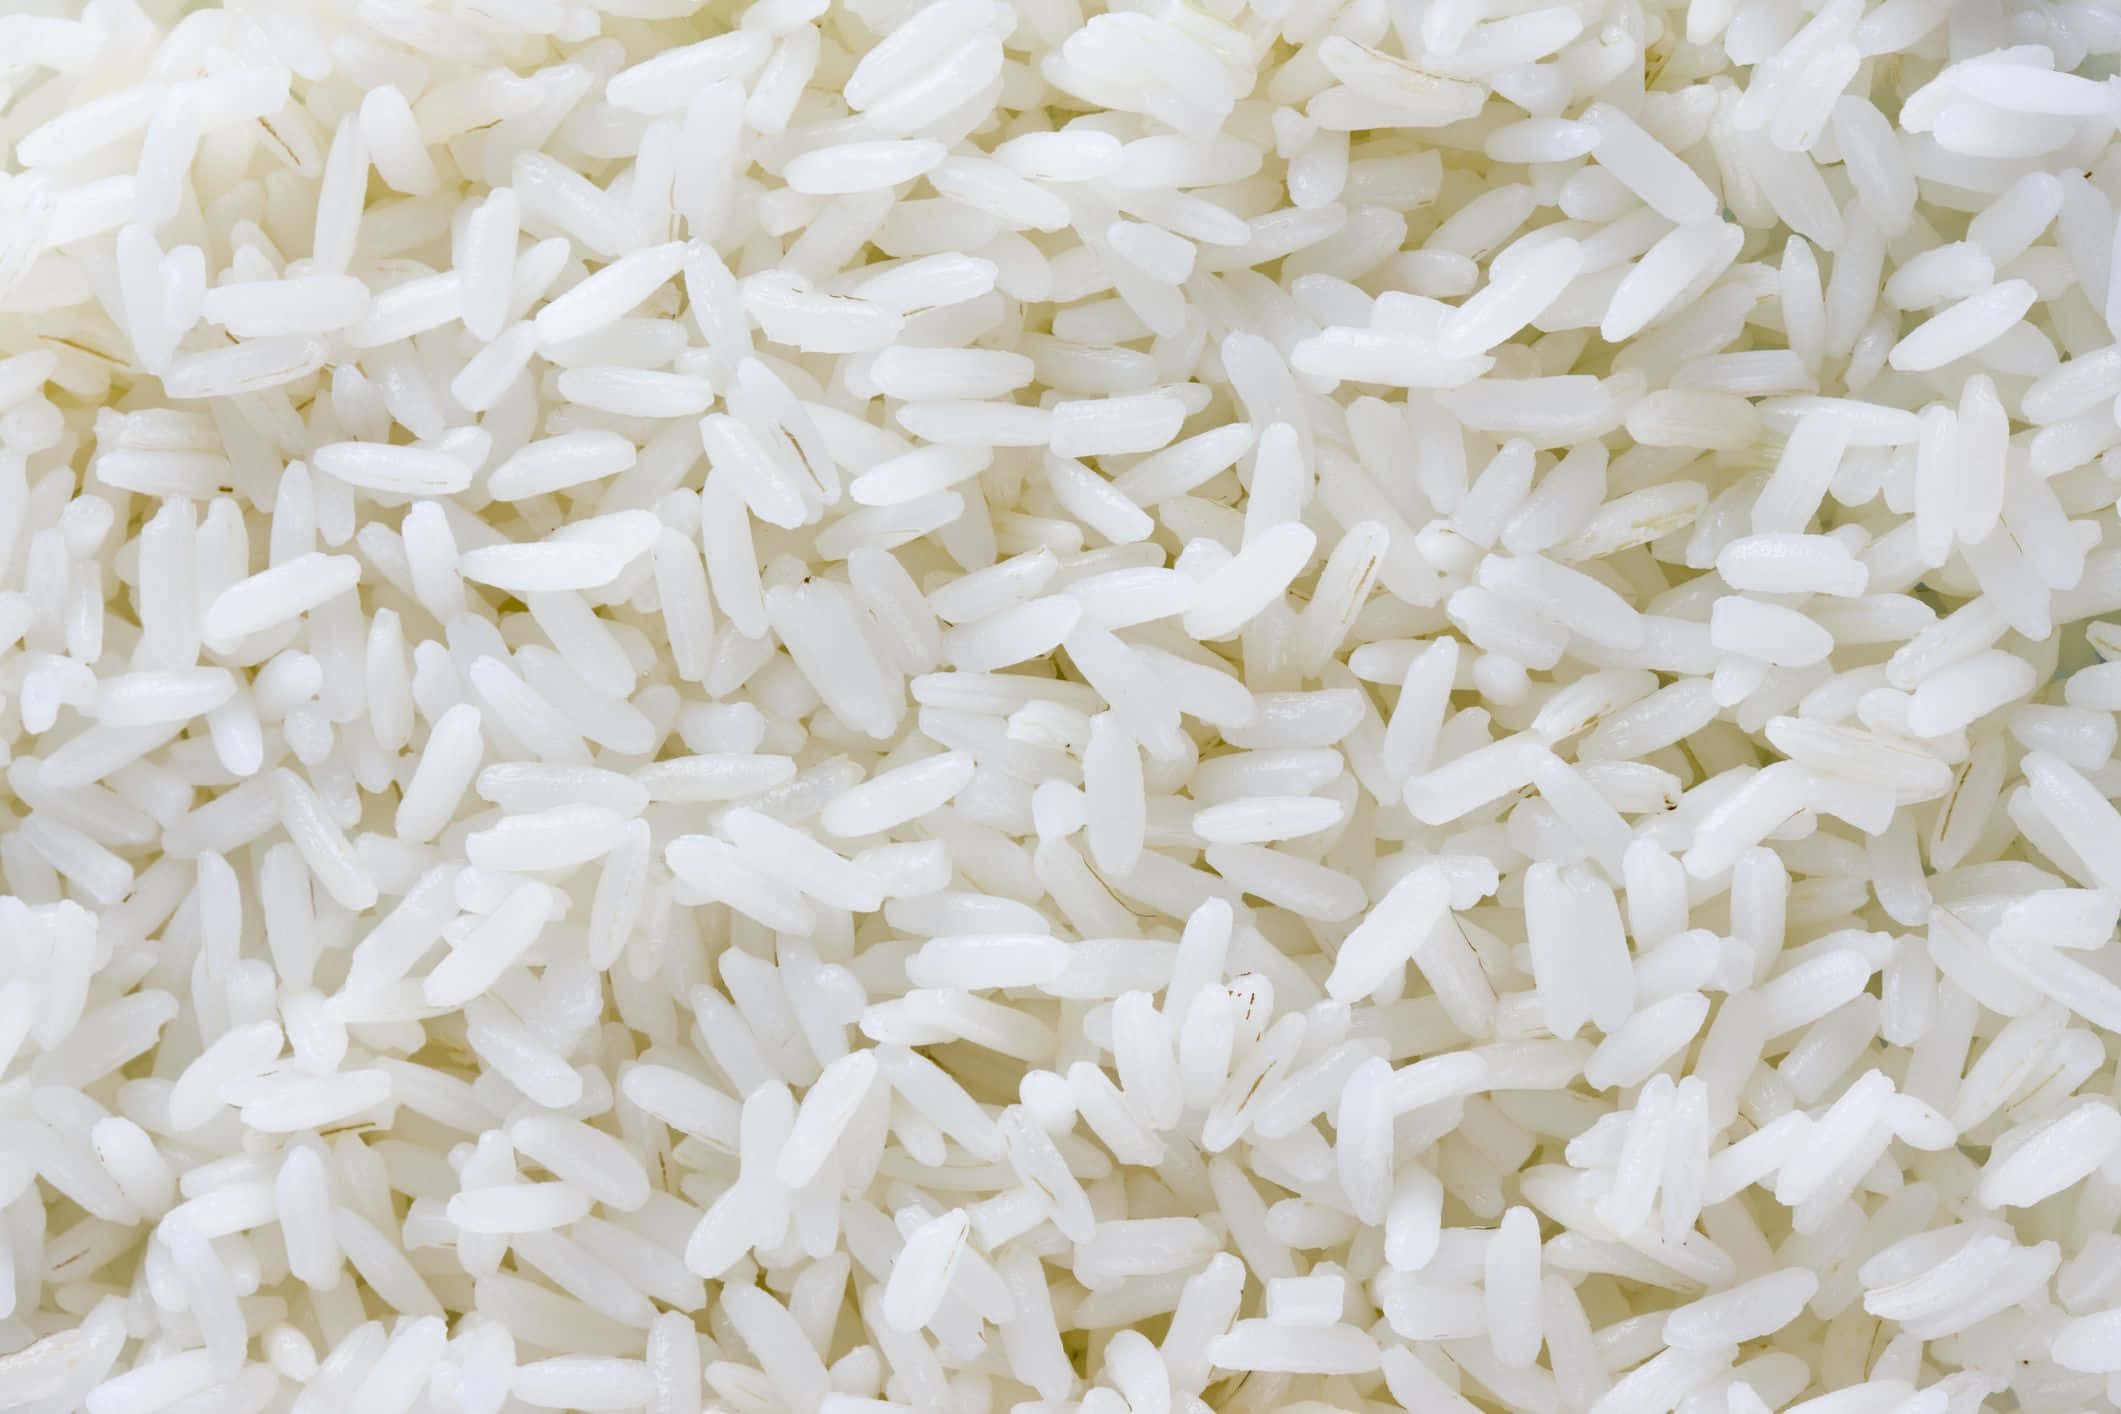 Rice Background